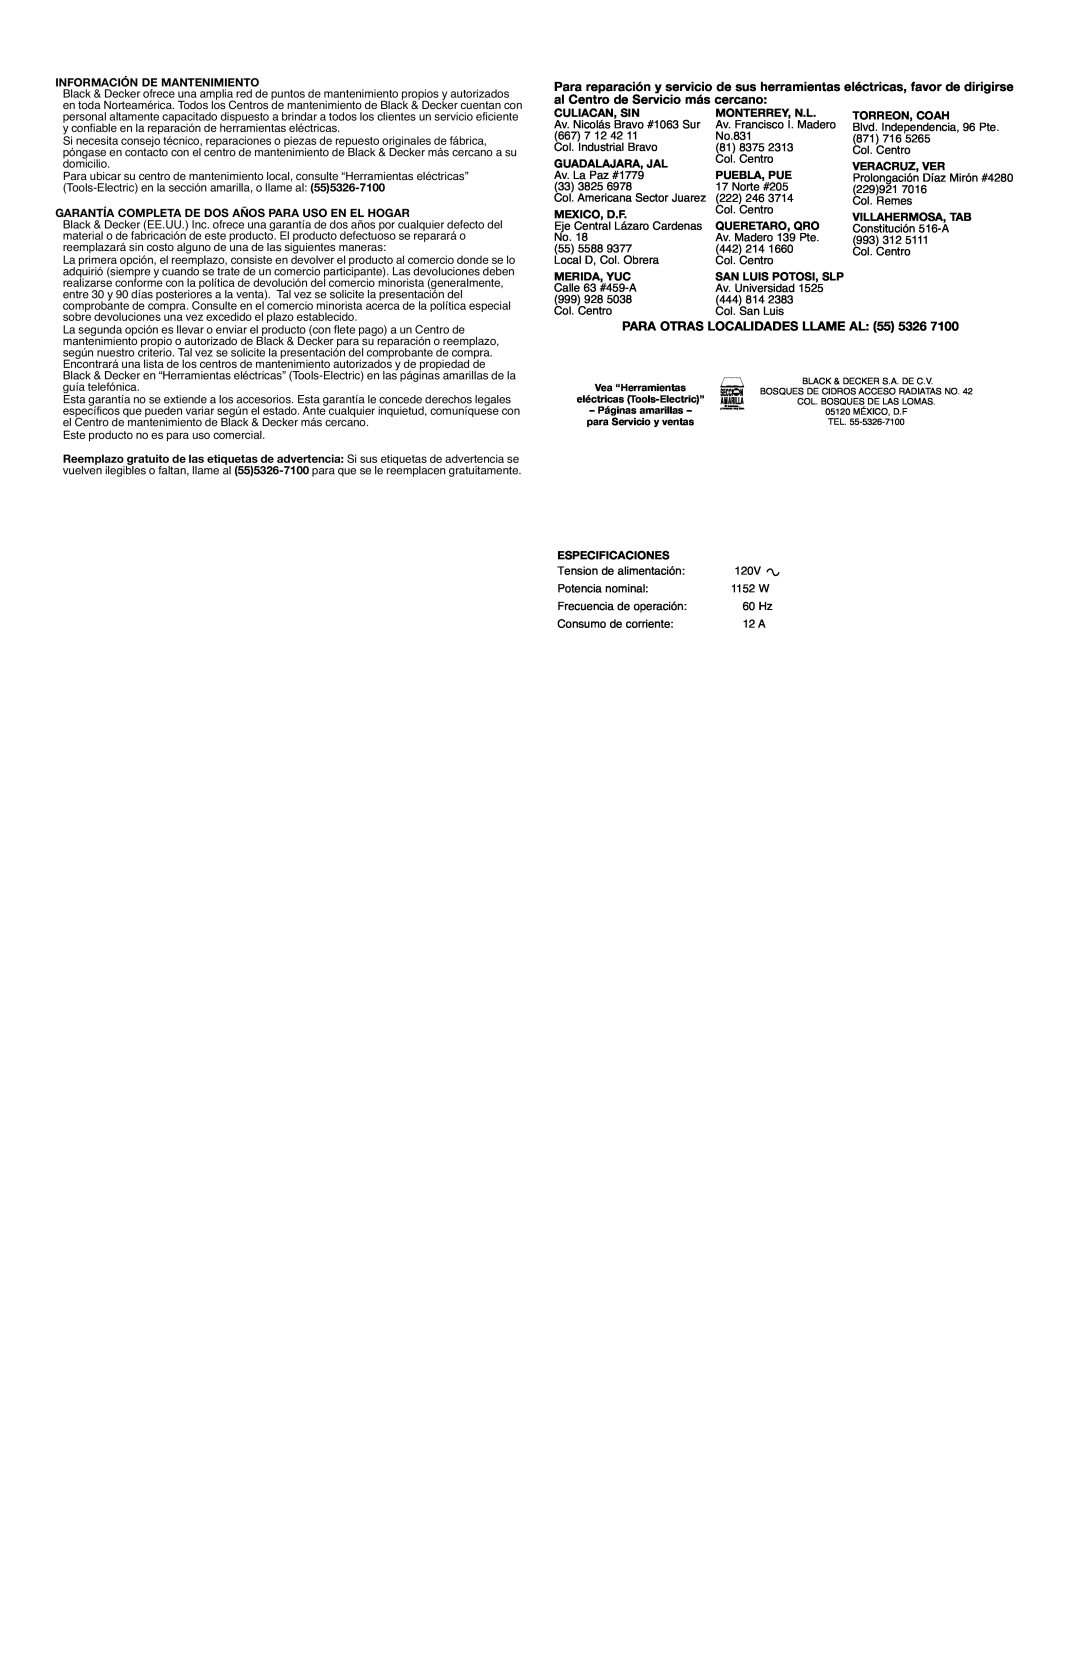 Black & Decker 625233-01, BV9000 instruction manual PARA OTRAS LOCALIDADES LLAME AL 55 5326 